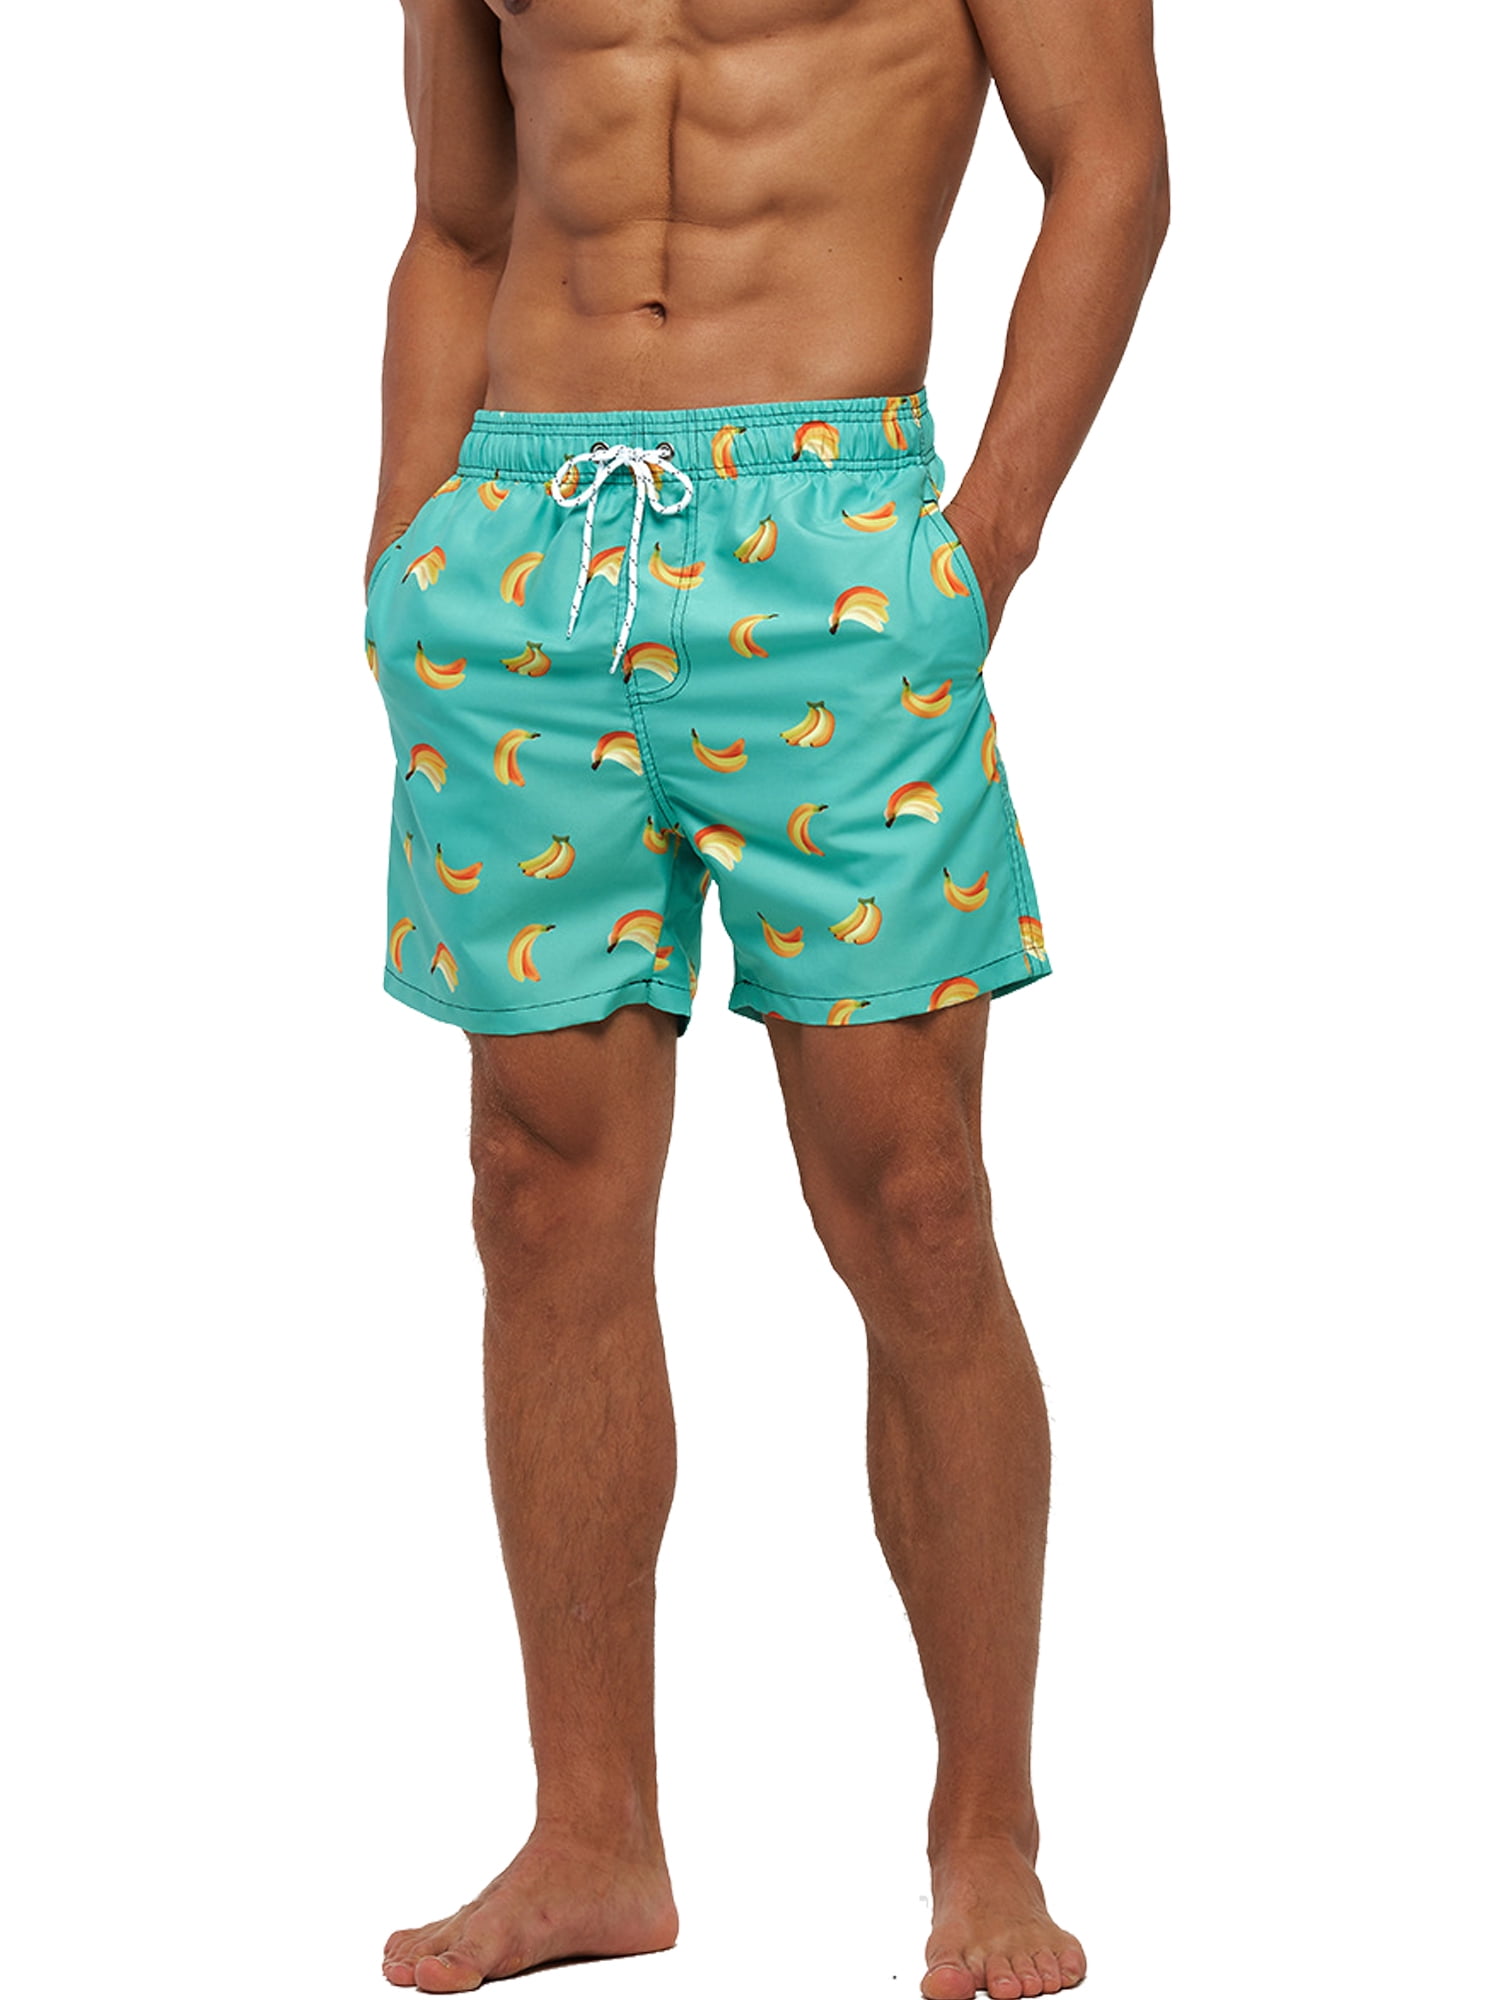 Mens Beach Swim Trunks Forest Bird Dog Boxer Swimsuit Underwear Board Shorts with Pocket 